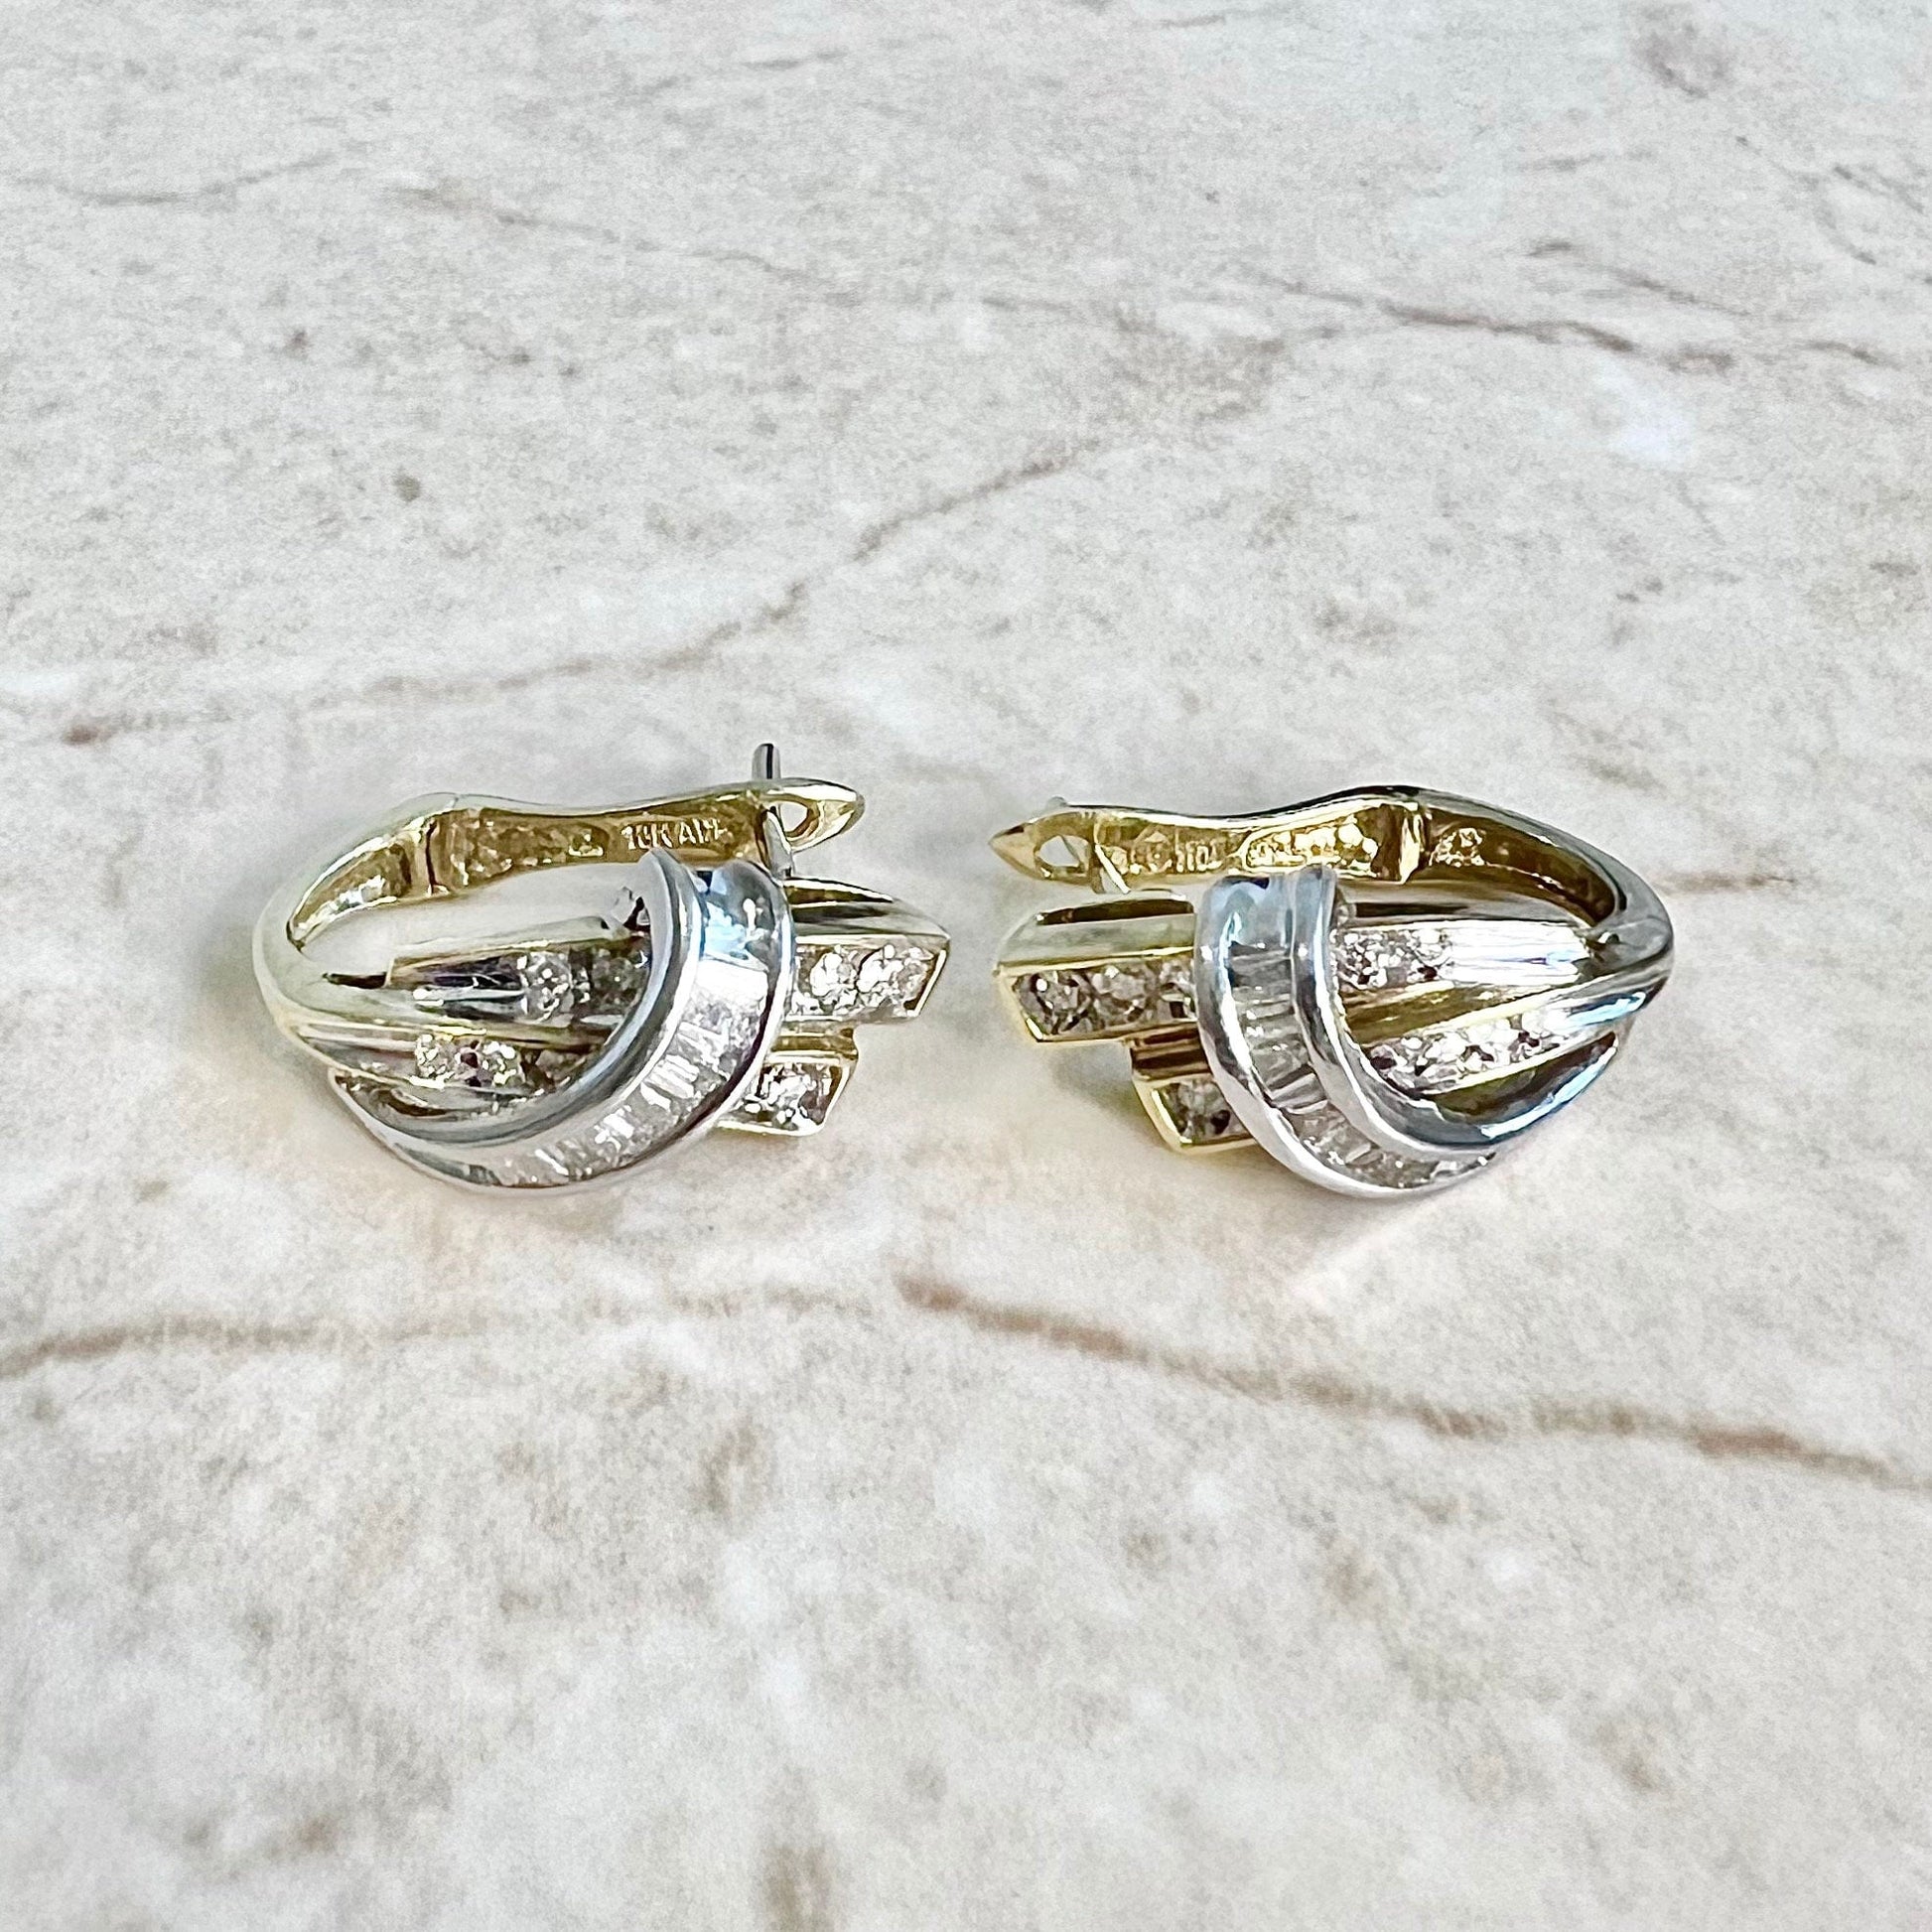 10K Diamond Huggie Hoop Earrings 0.30 CTTW - Two Tone Gold Diamond Earrings - Crossover Hoop Earrings - Huggie Earrings - Best Gifts For Her